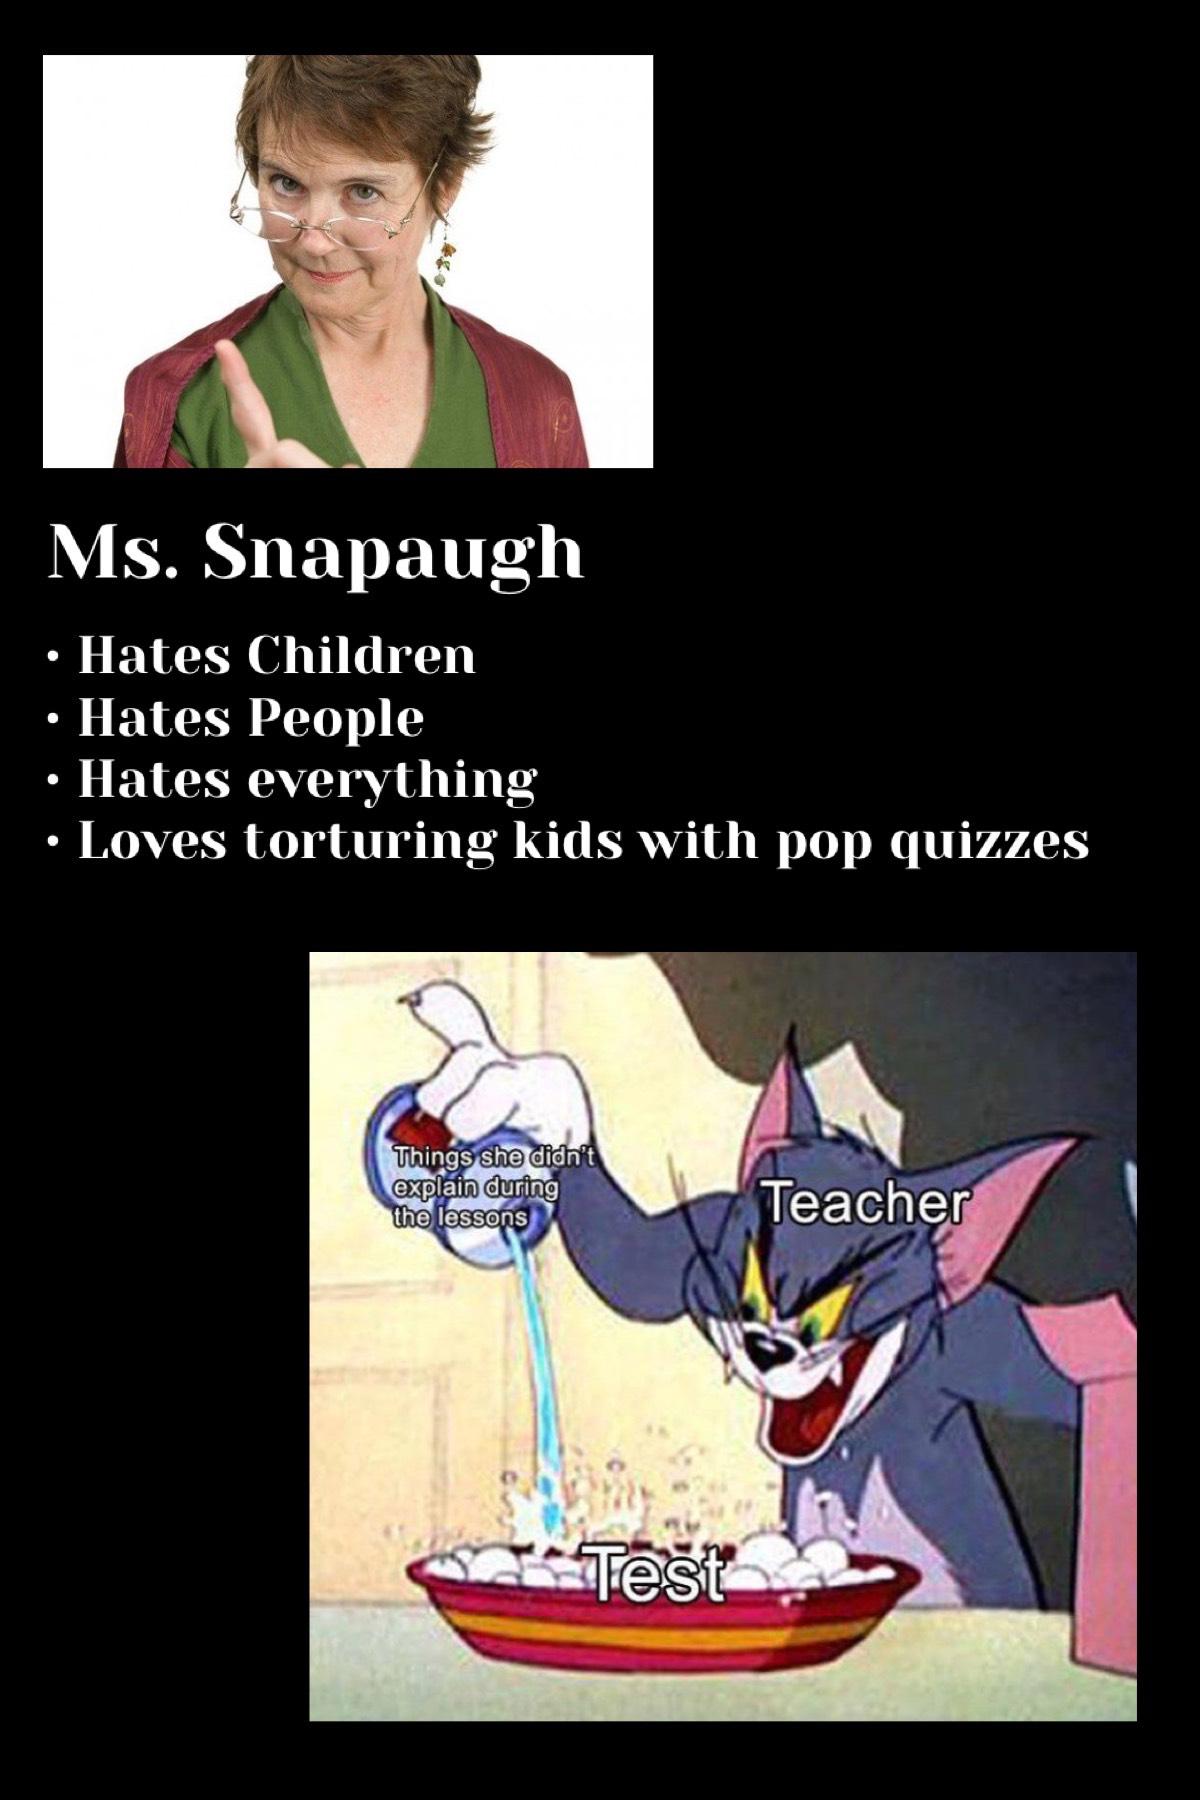 anyone can play Ms. Snapaugh at any time